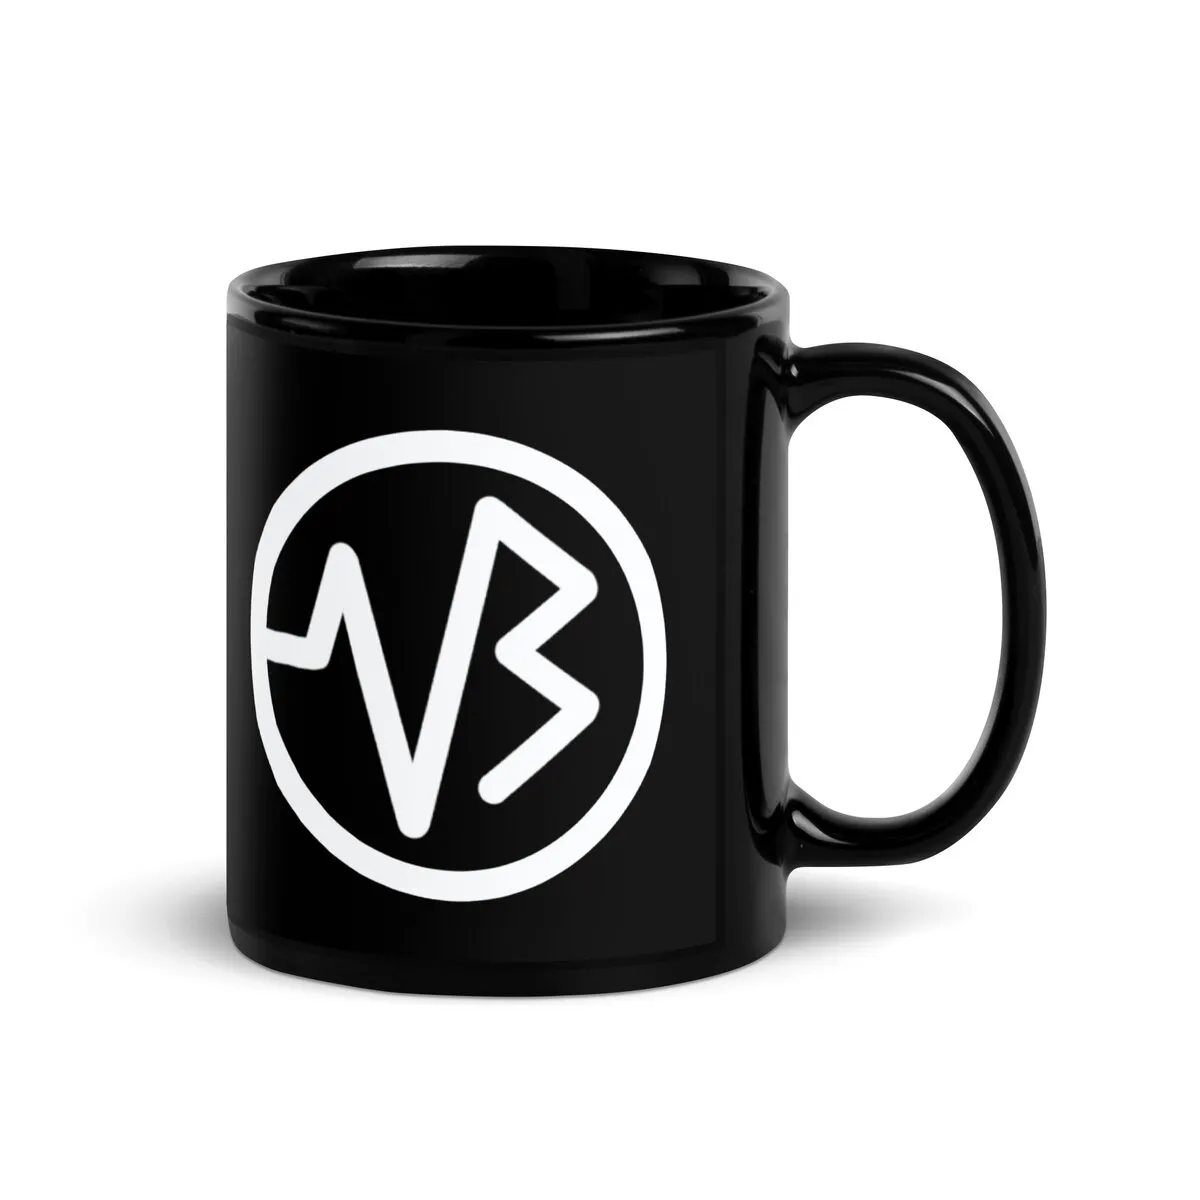 VB Monogram Mug - Black